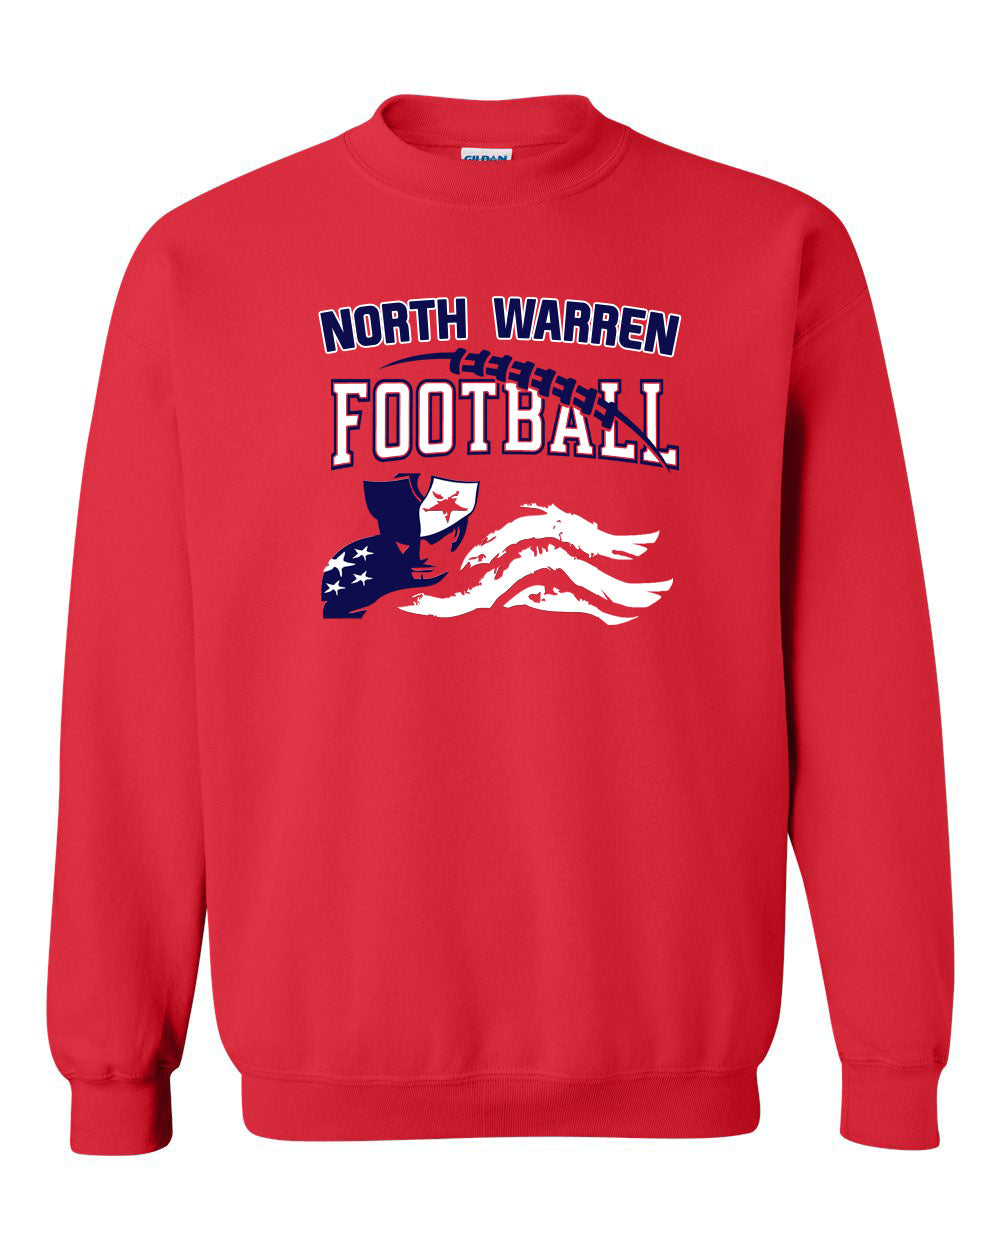 NW Football Design 6 non hooded sweatshirt